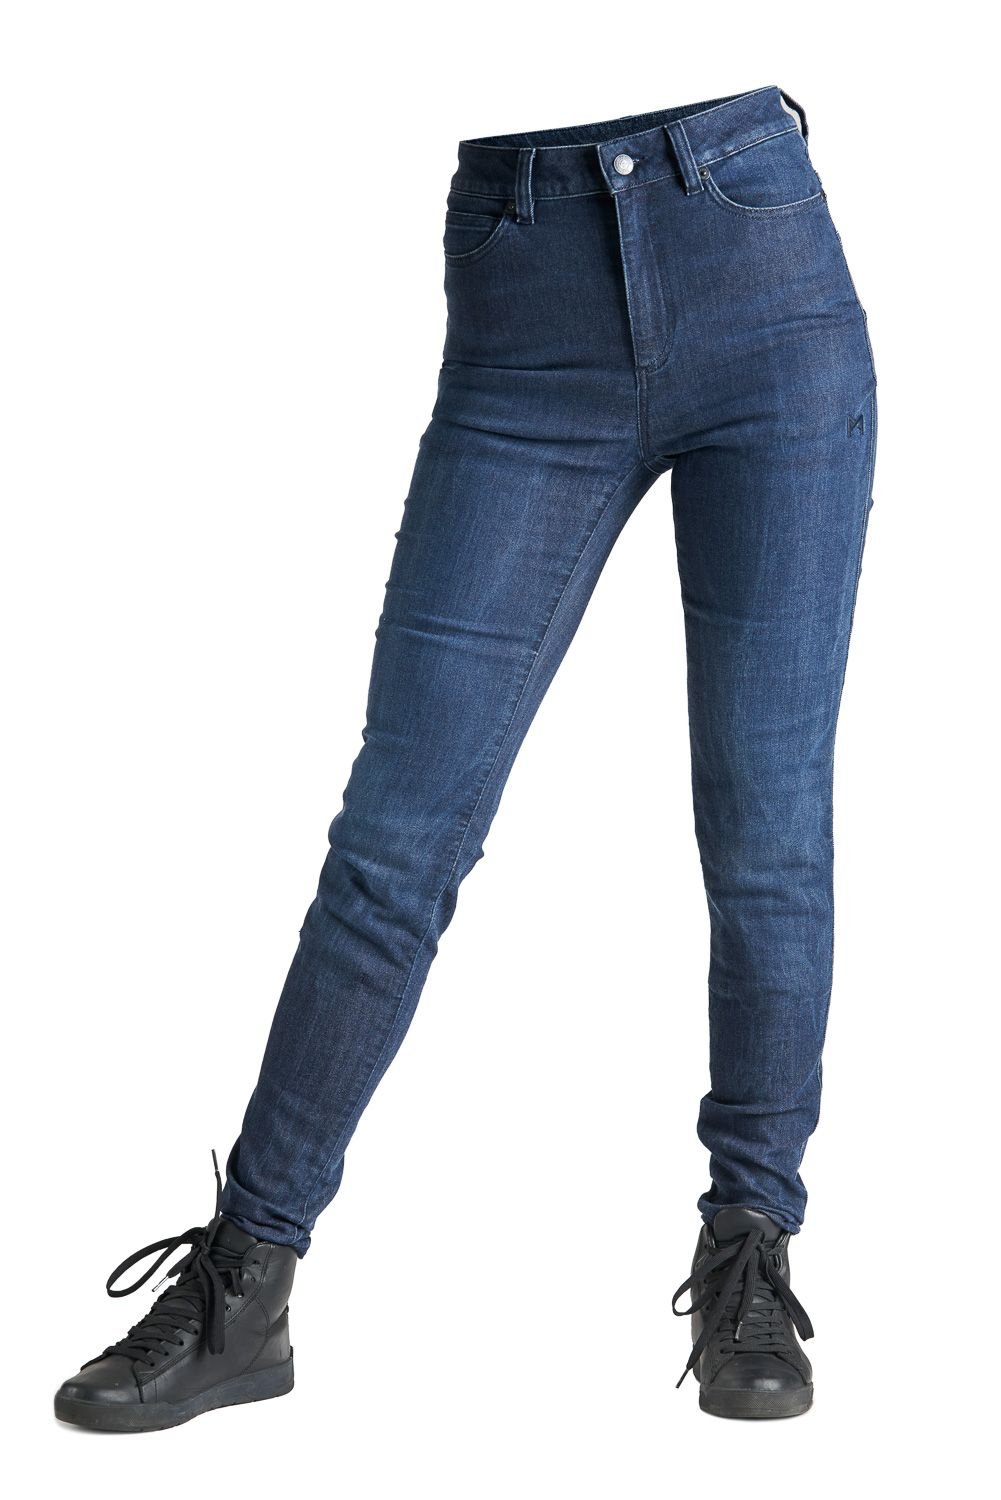 Image of Pando Moto Kusari Cor 02 Women Motorcycle Jeans Skinny-Fit Cordura Talla W29/L32